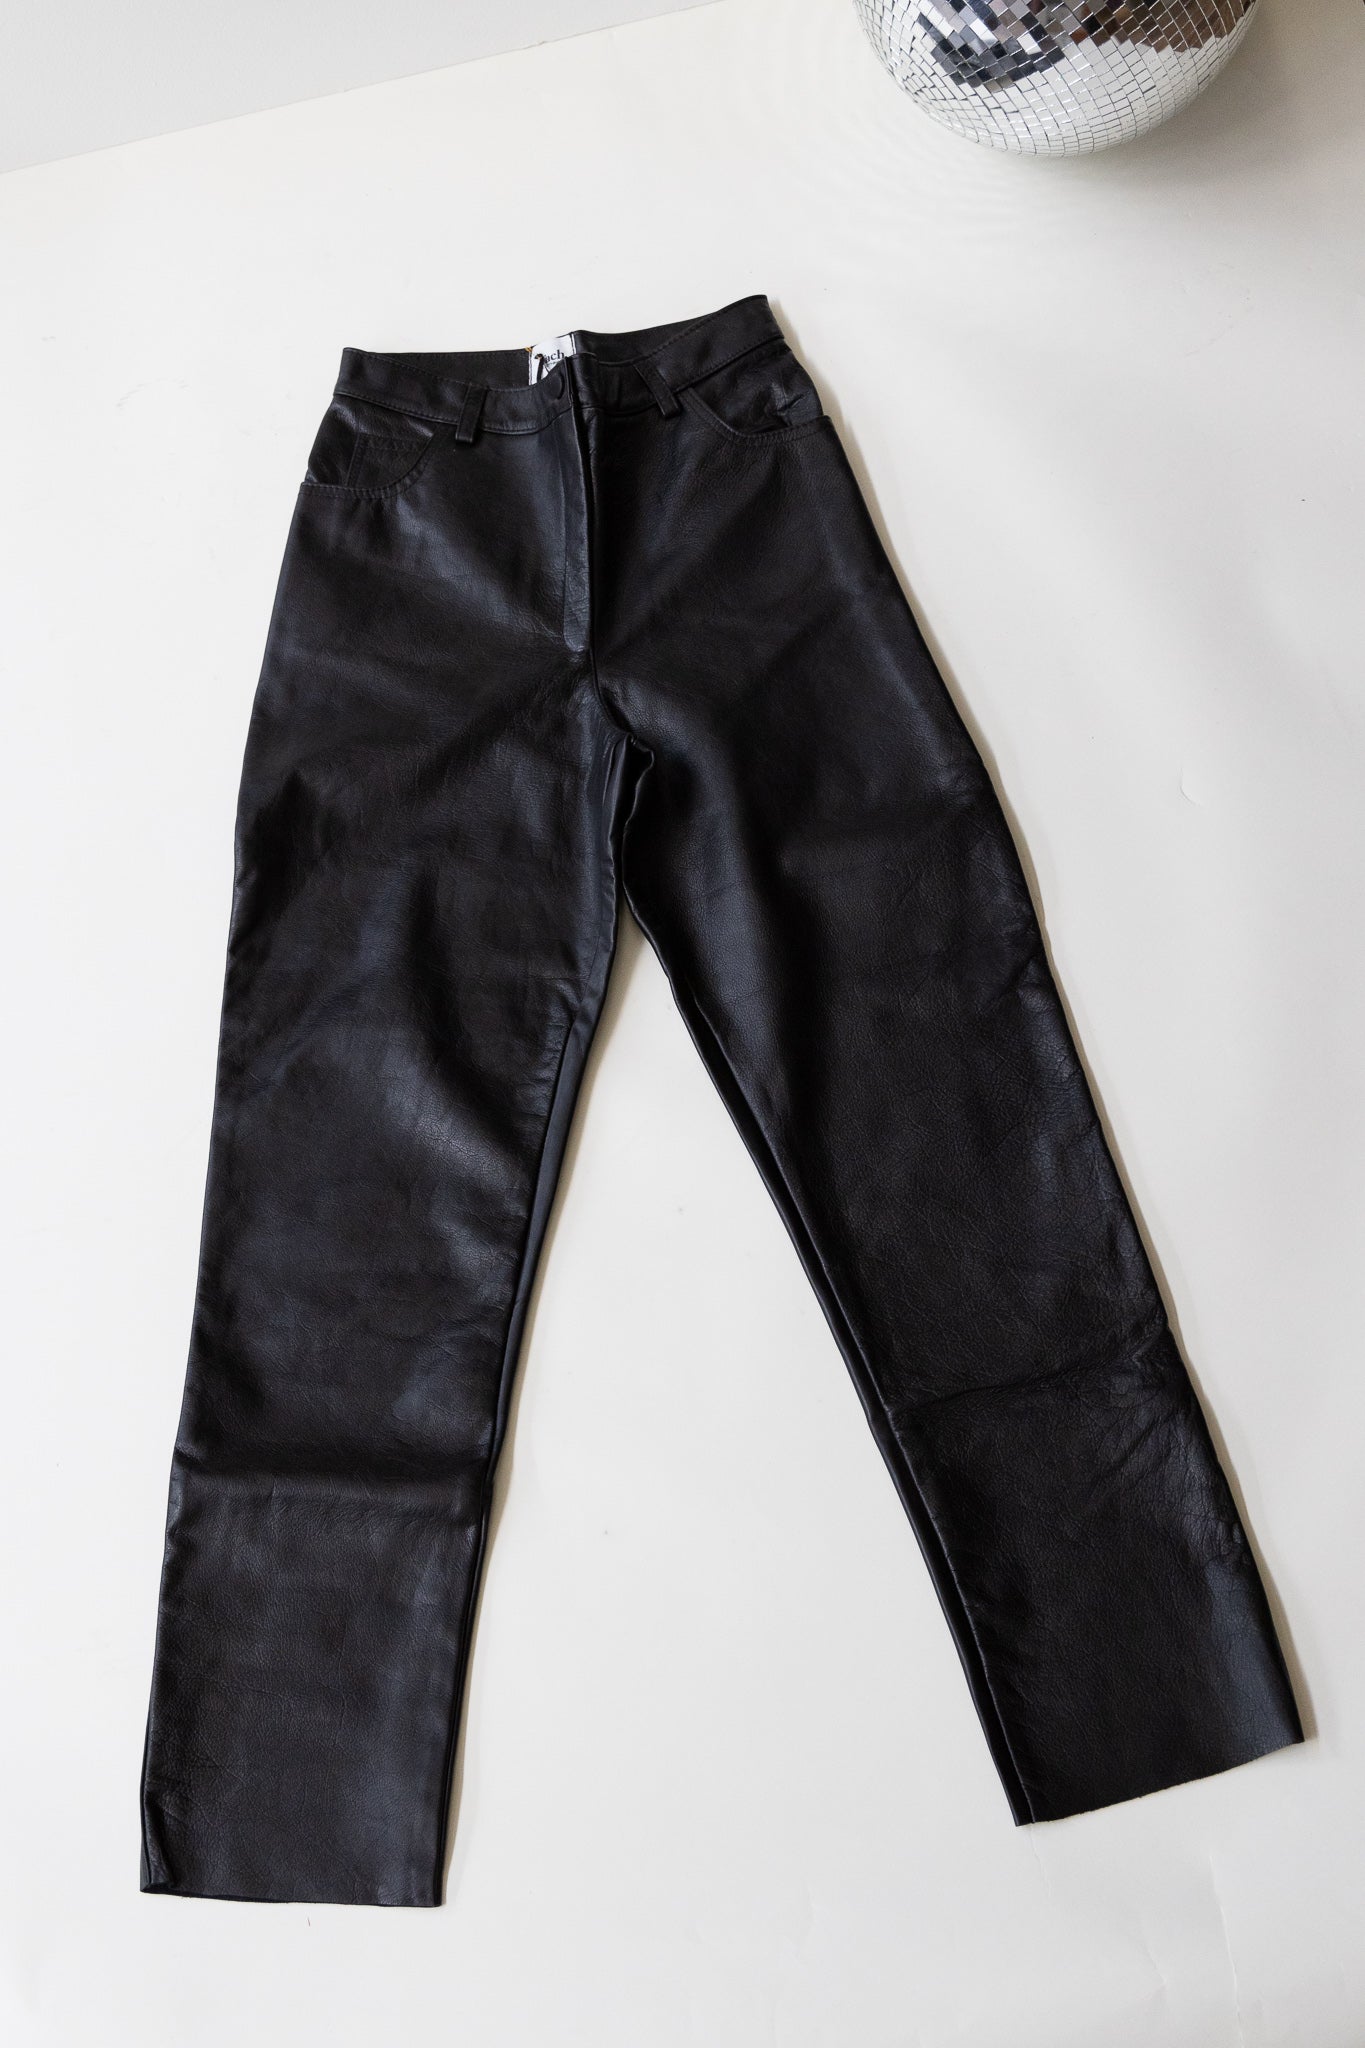 dilma leather pant - black